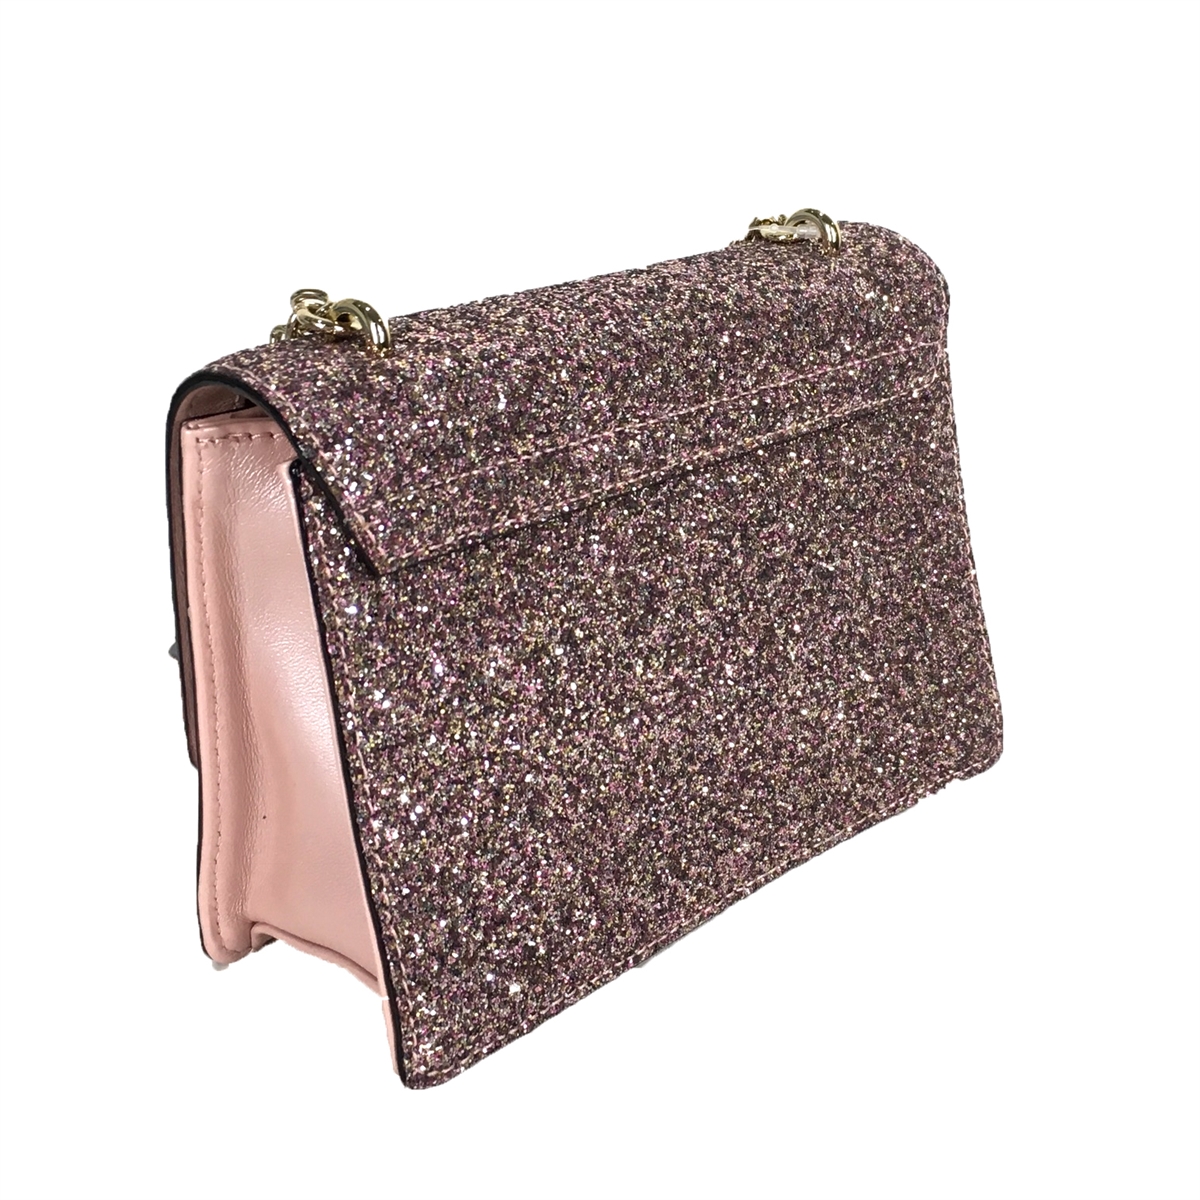 New Kate Spade Sunset Lane Brynlee Crossbody Bag Purse Glitter Rosegold  Sparkle